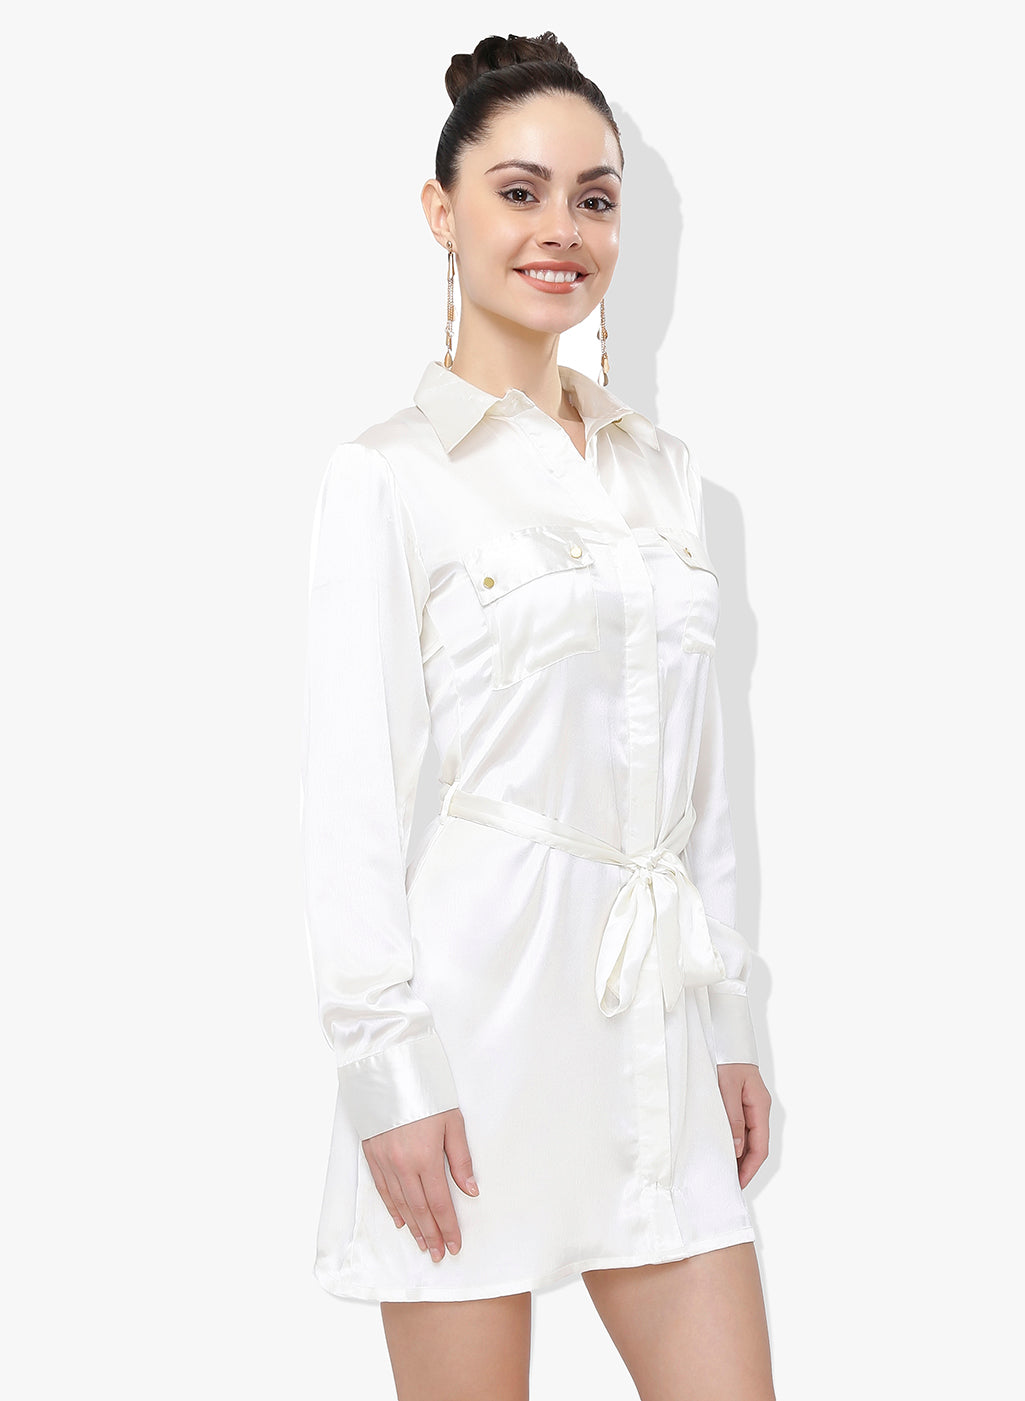 White Easy-Care Shirt - Button Front Shirt | Jones New York